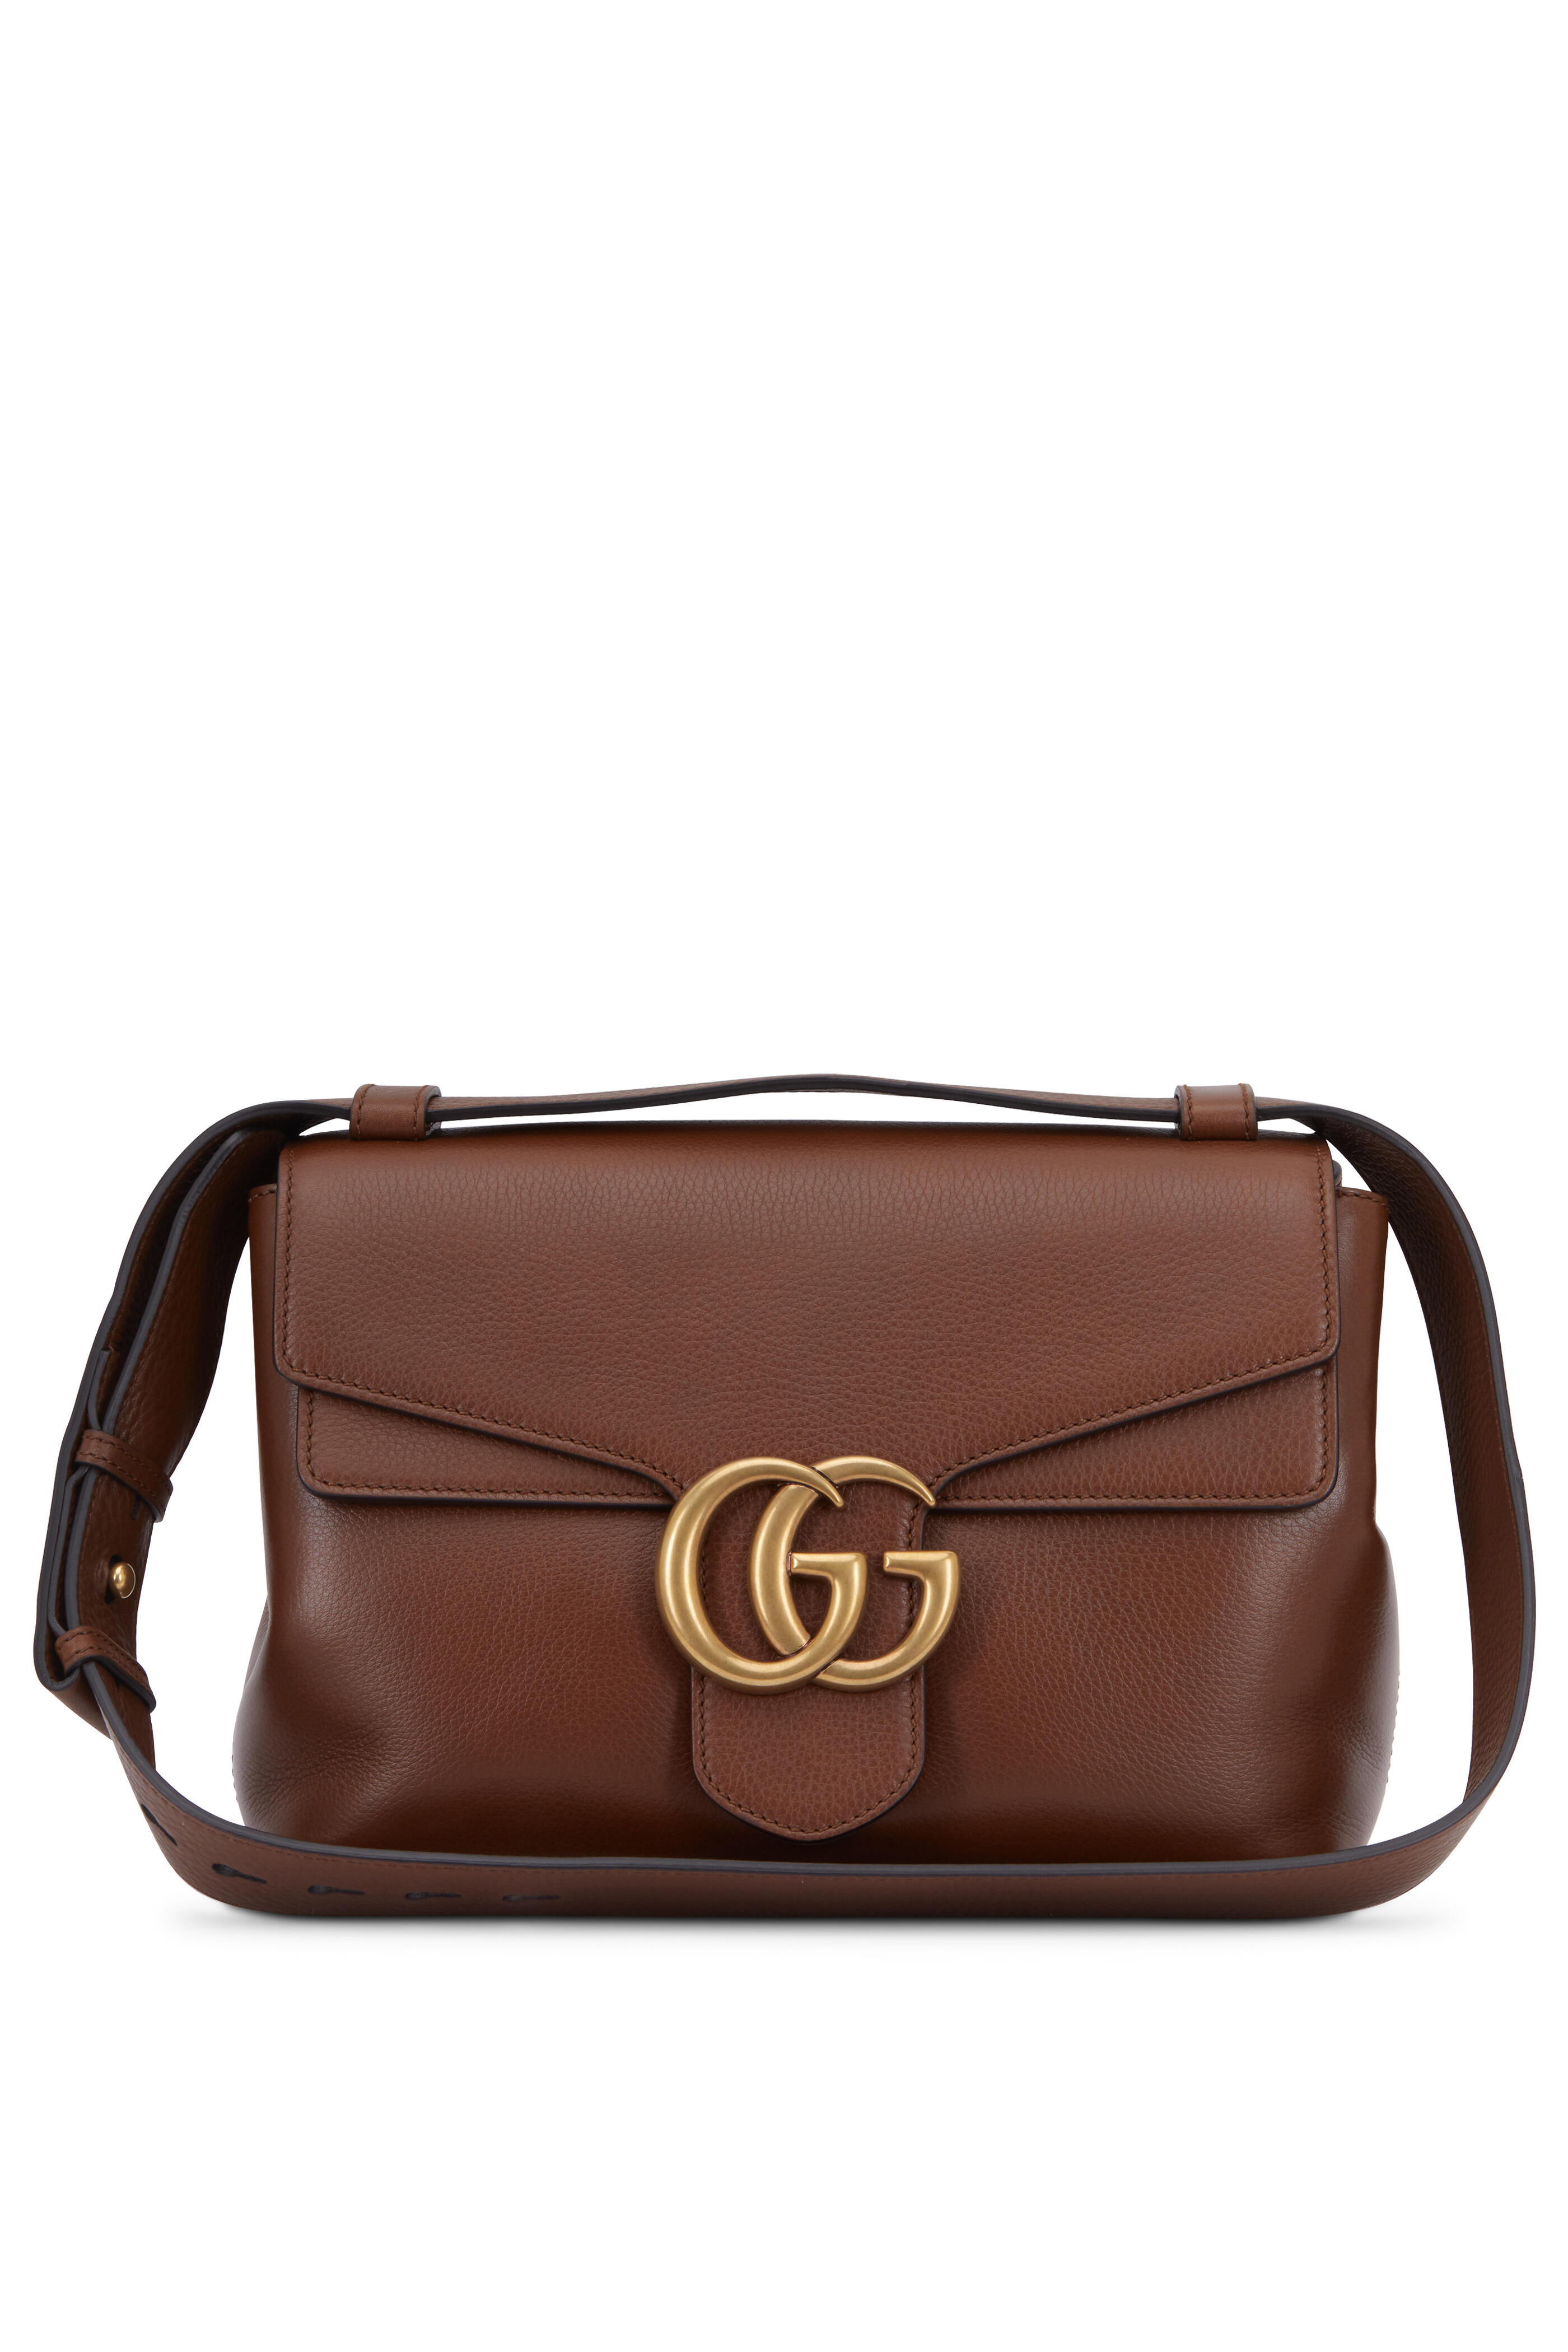 Gucci GG Marmont quilted leather shoulder bag - Women - Black Shoulder Bags